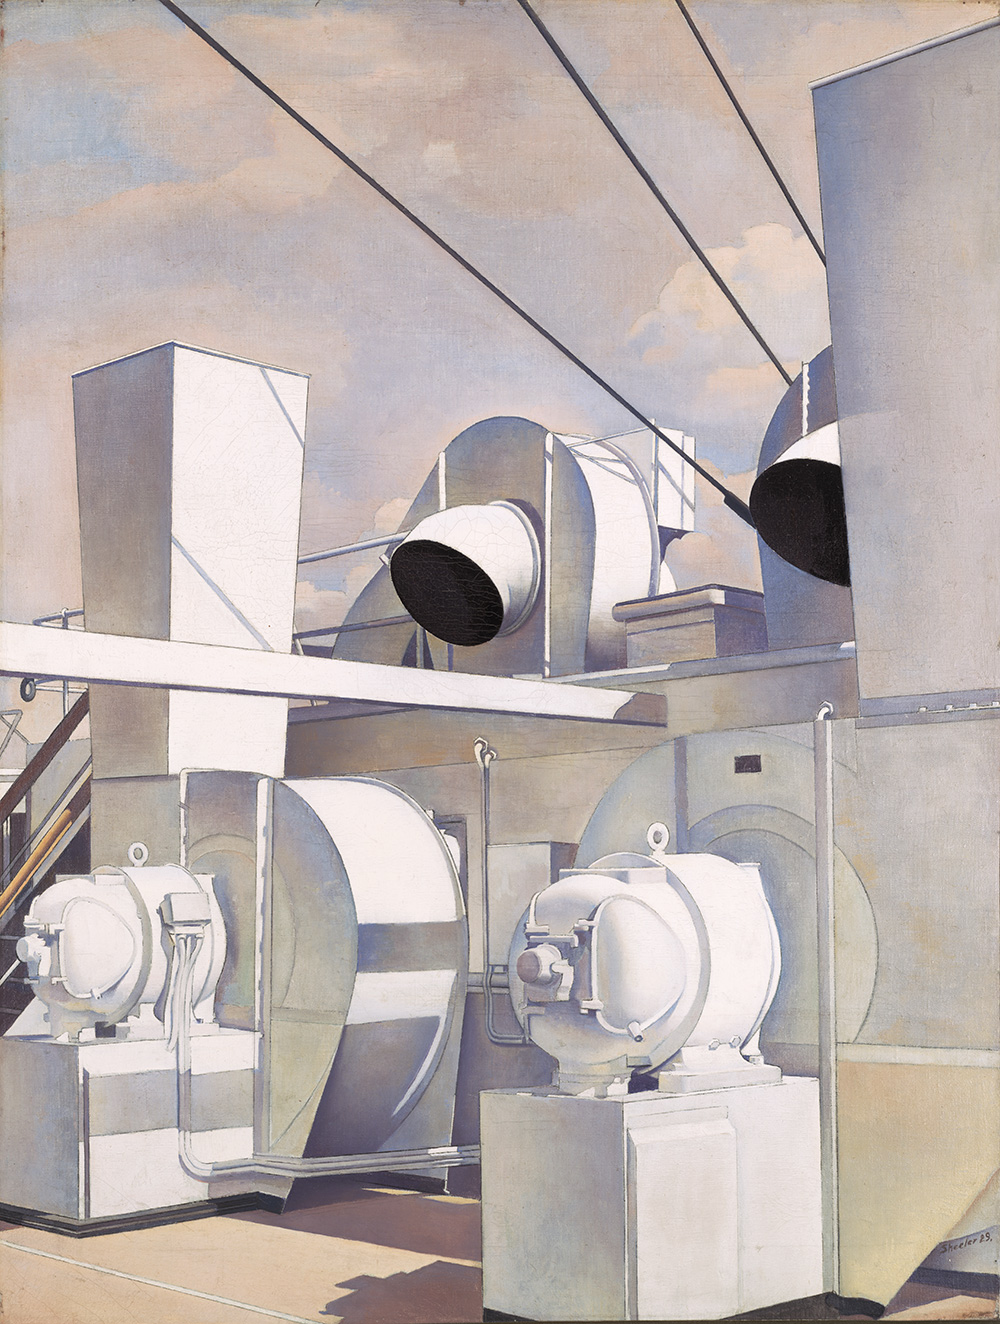 Charles Sheeler, "Upper Deck," 1929. Oil on canvas, 28 3/4 x 21 3/4 in. (73 x 55.3 cm). Harvard Art Museums / Fogg Museum, Cambridge, Massachusetts, Louise E. Bettens Fund, 1933, 1933.97